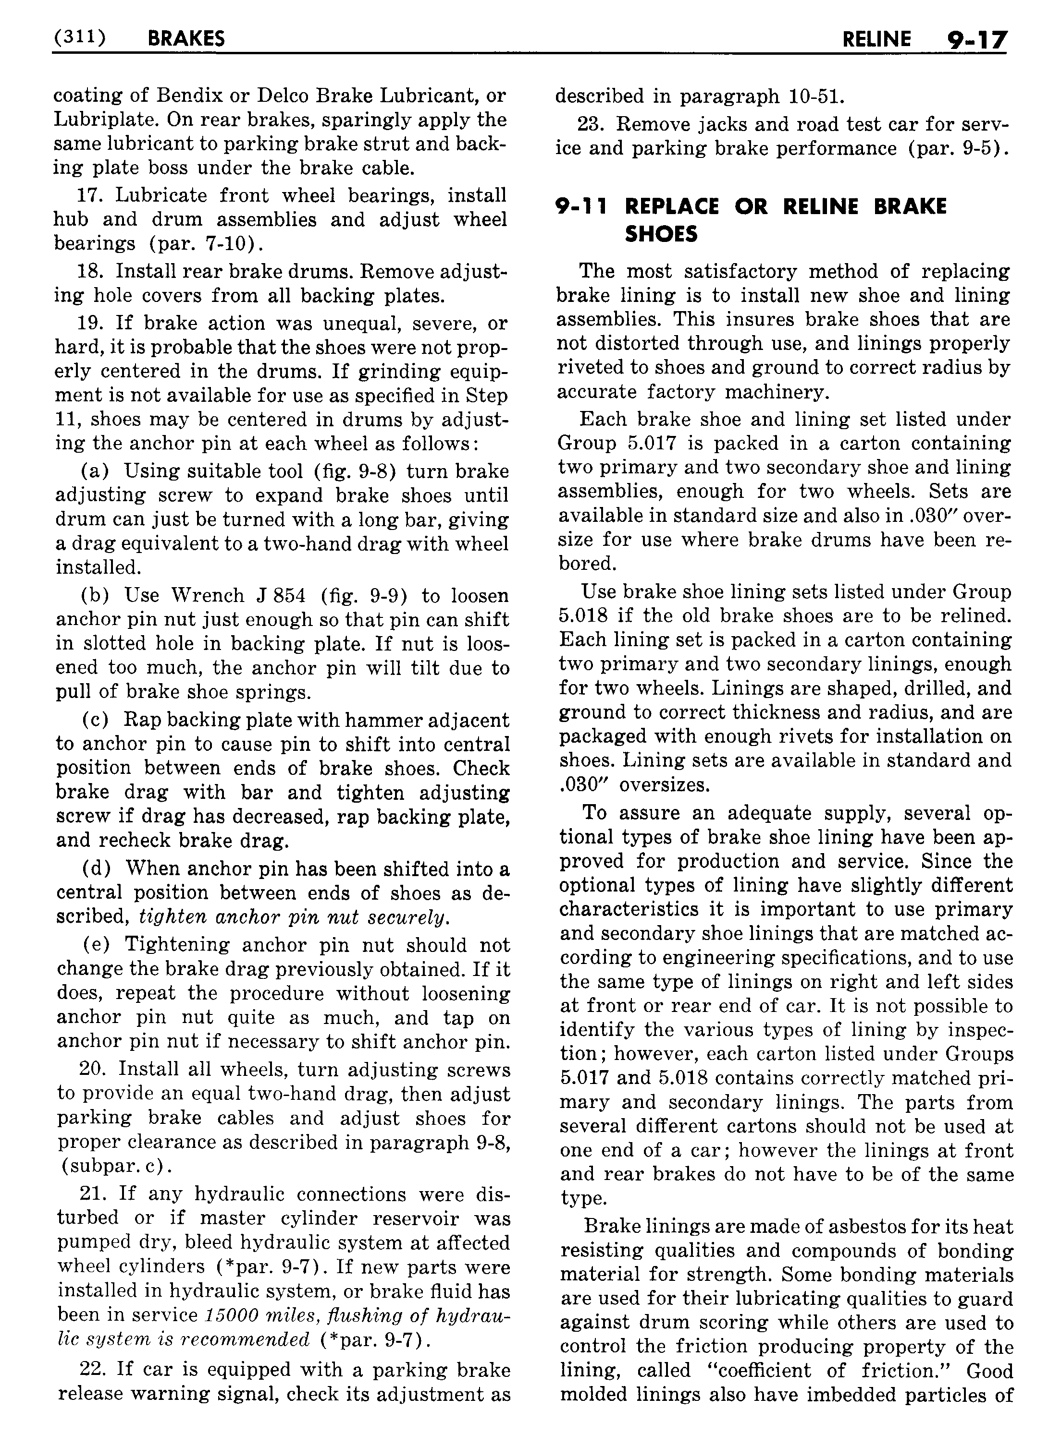 n_10 1956 Buick Shop Manual - Brakes-017-017.jpg